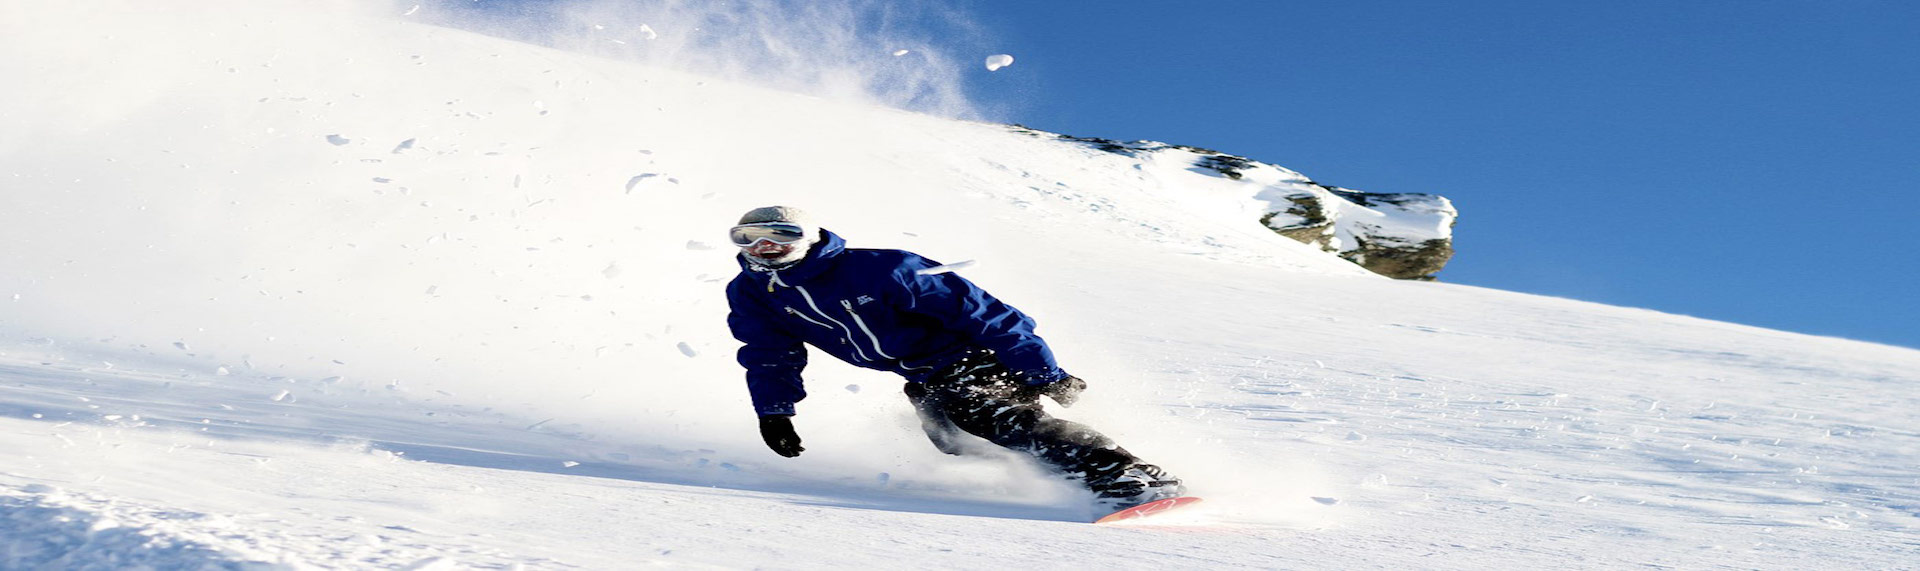 Guy wearing blue jacket snowboarding down snow slope